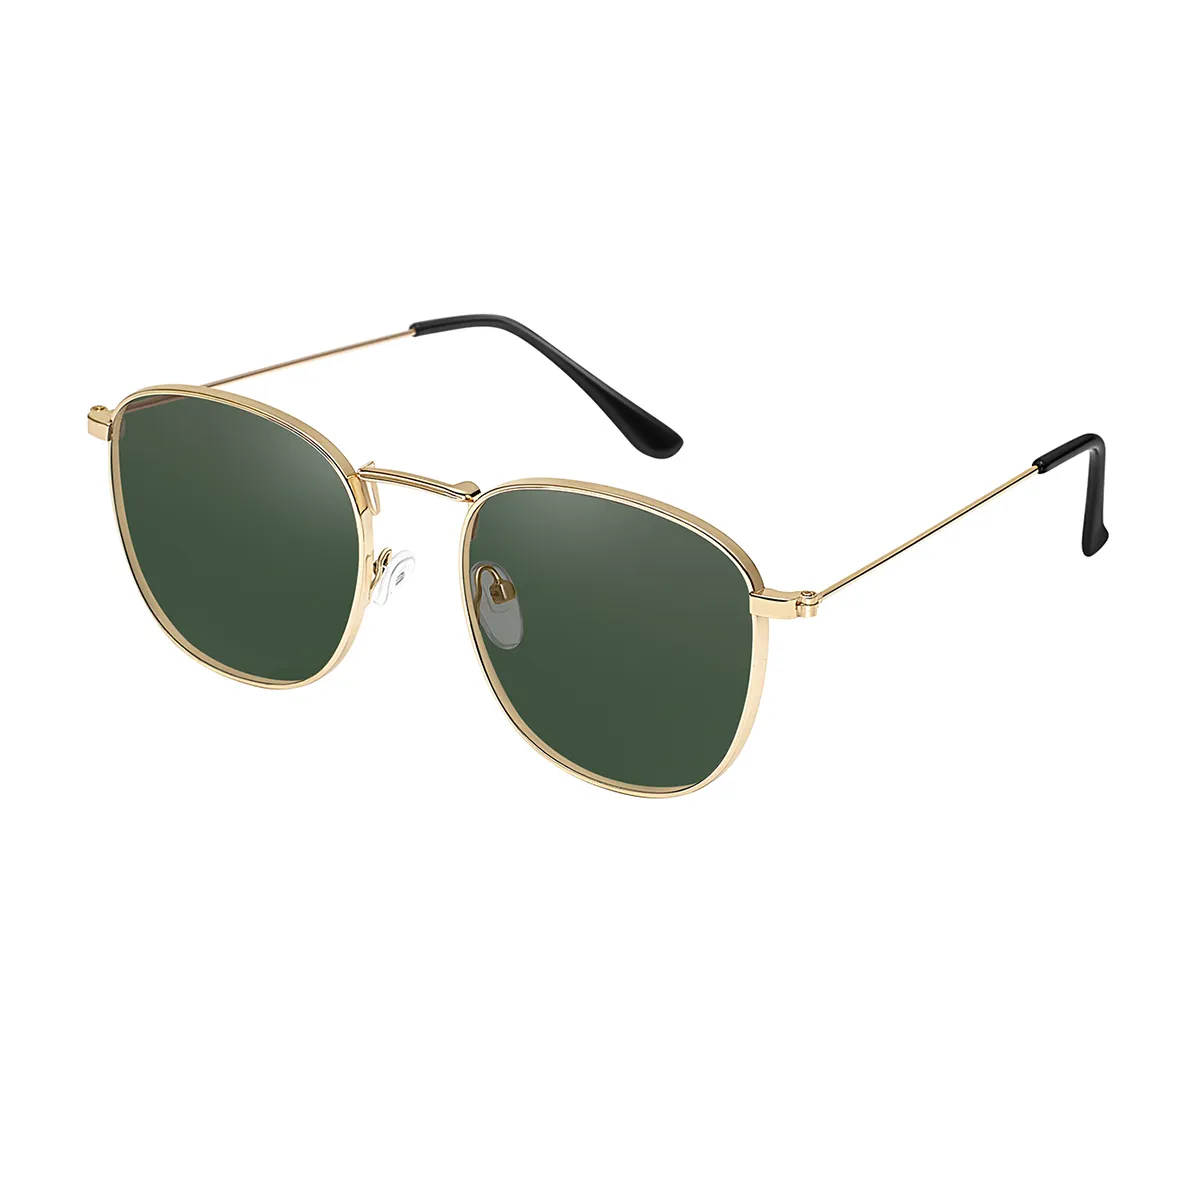 Murphy - Square Gold Sunglasses for Men & Women